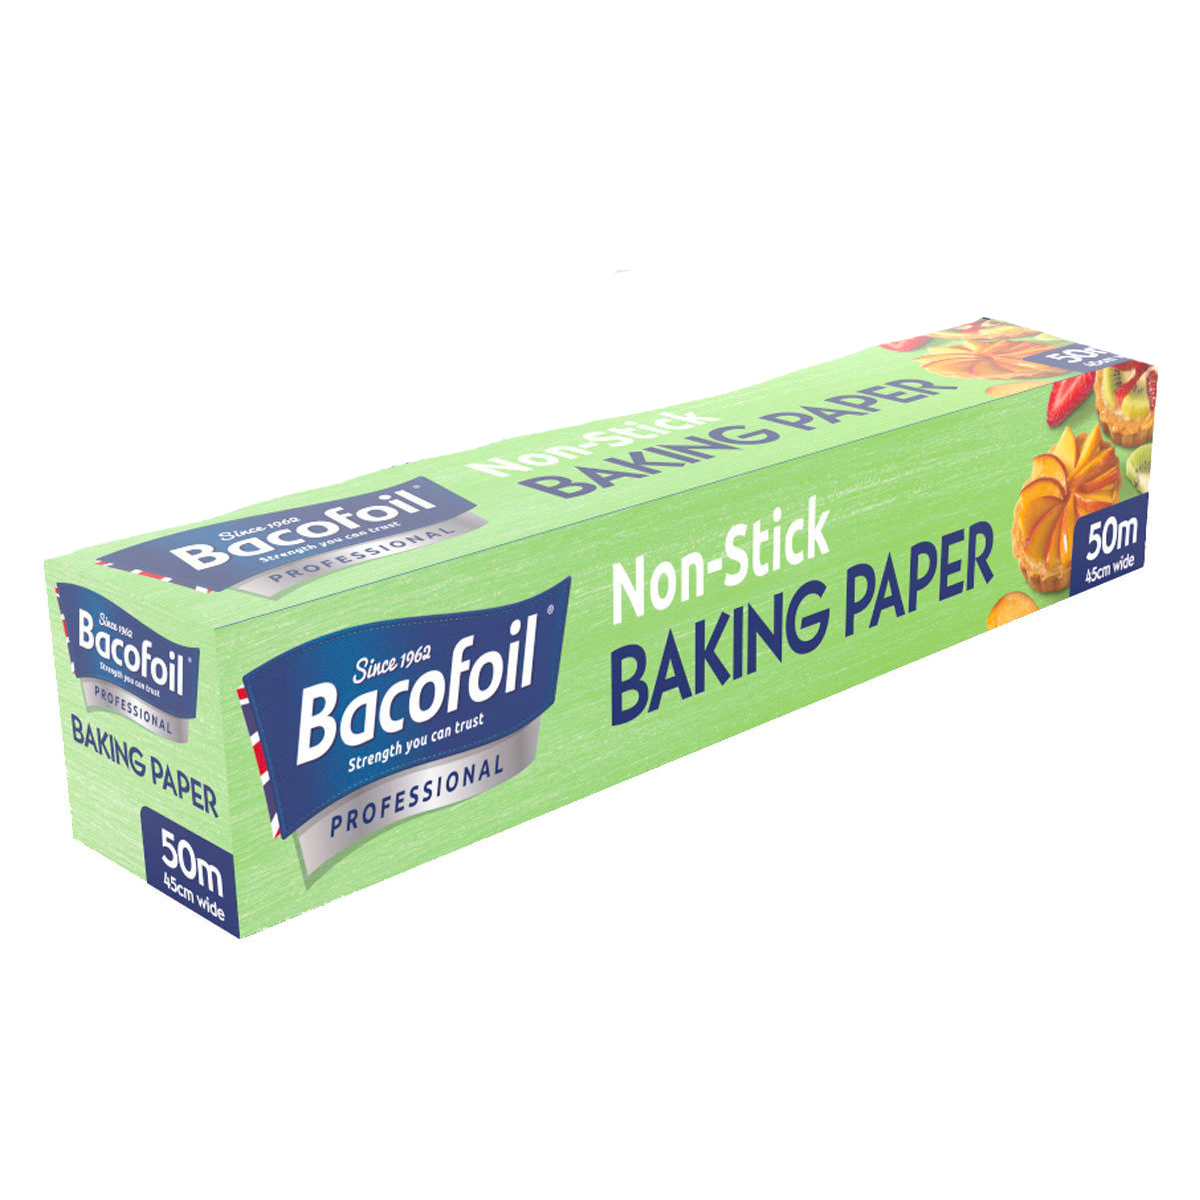 Sainsbury's Non Stick Baking Paper